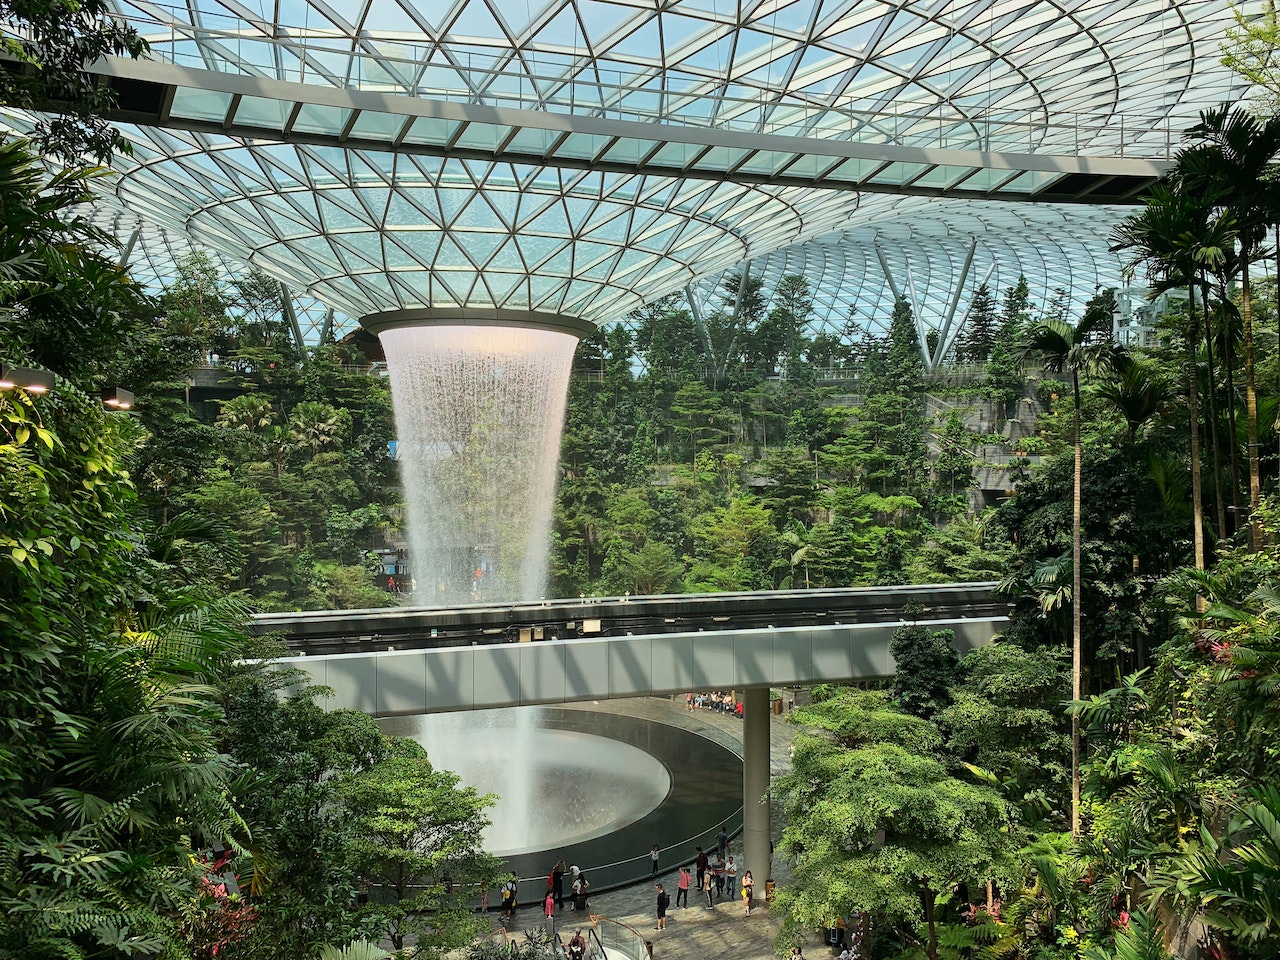 Singapore's Entrepreneurial Renaissance: Nurturing Innovation and Growth